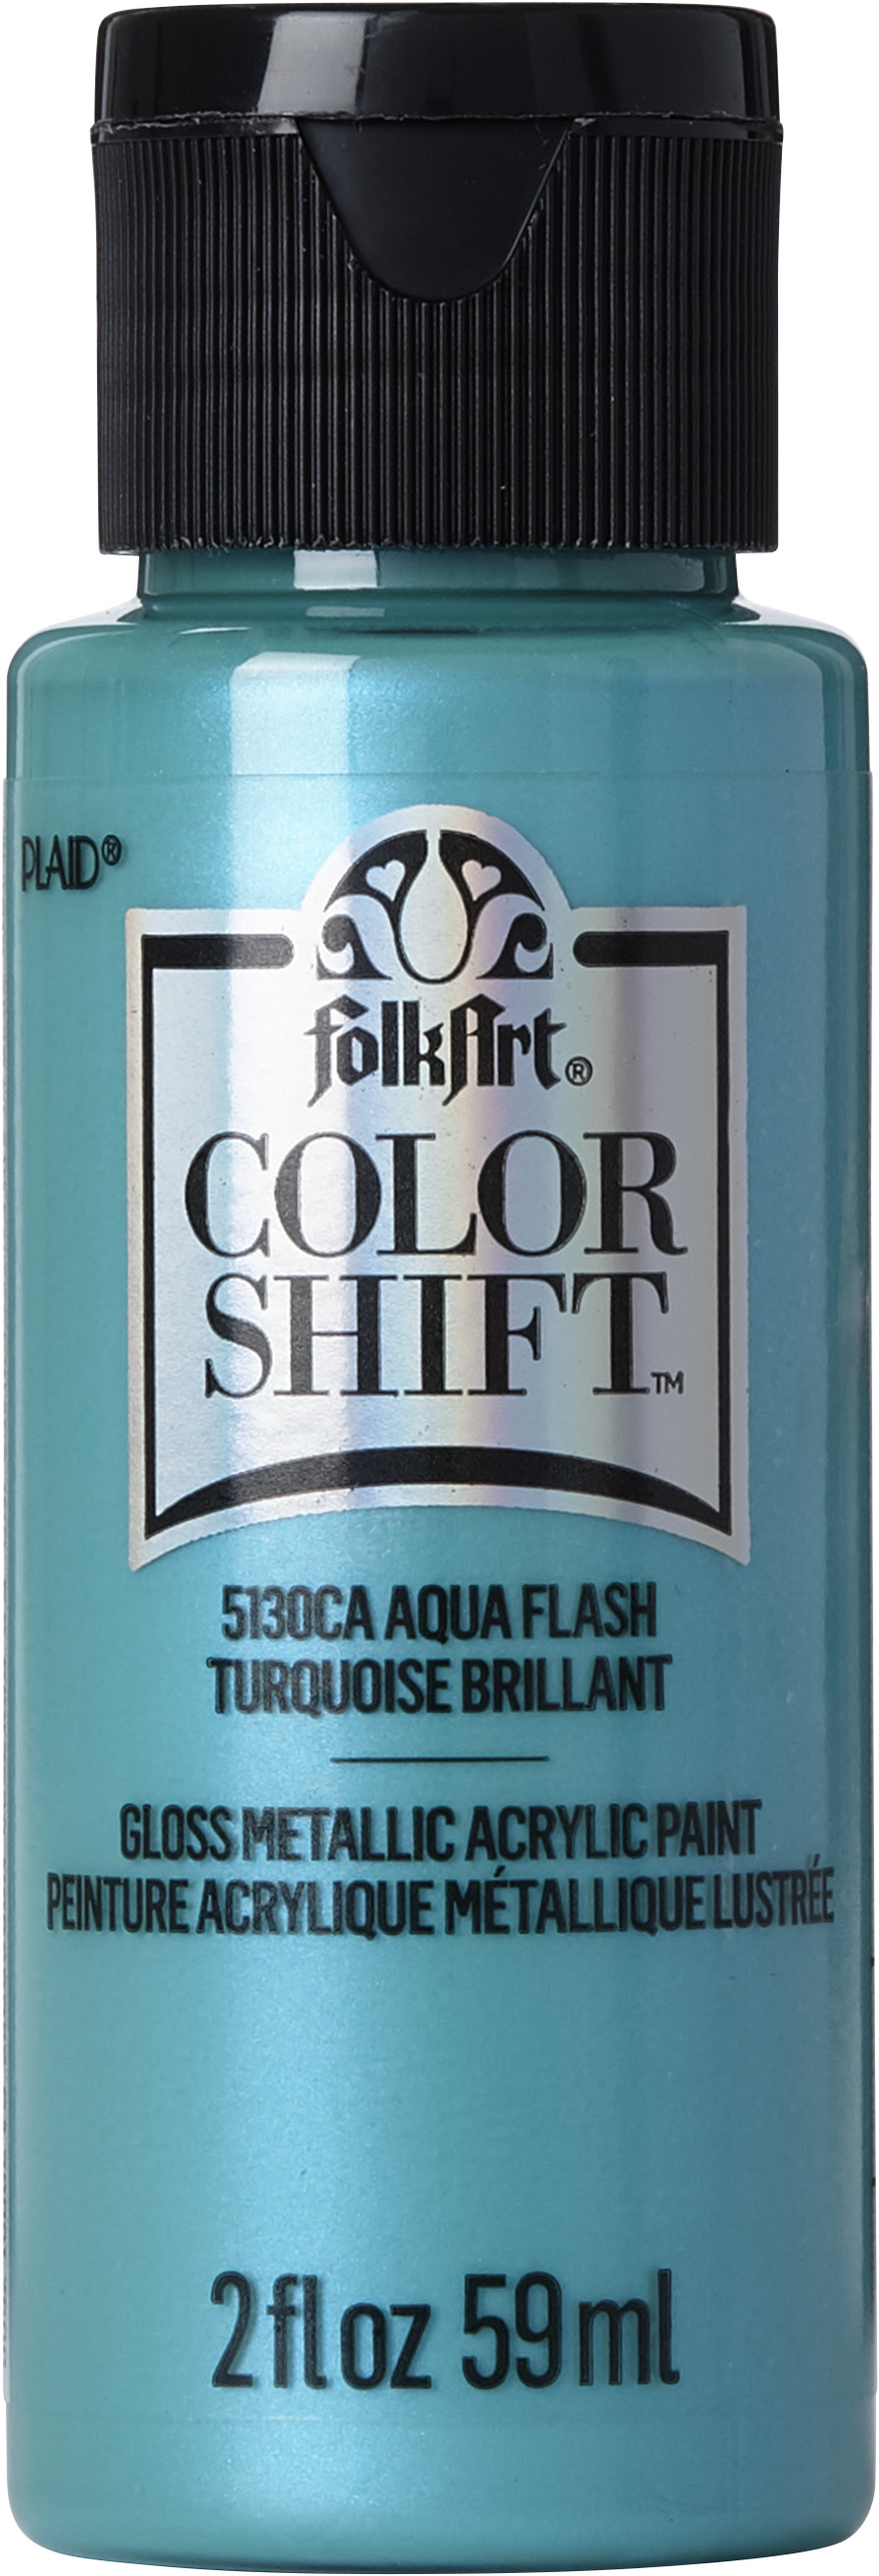 FolkArt Color Shift Metallic Acrylic Paint, Aqua Flash - 2 fl oz bottle